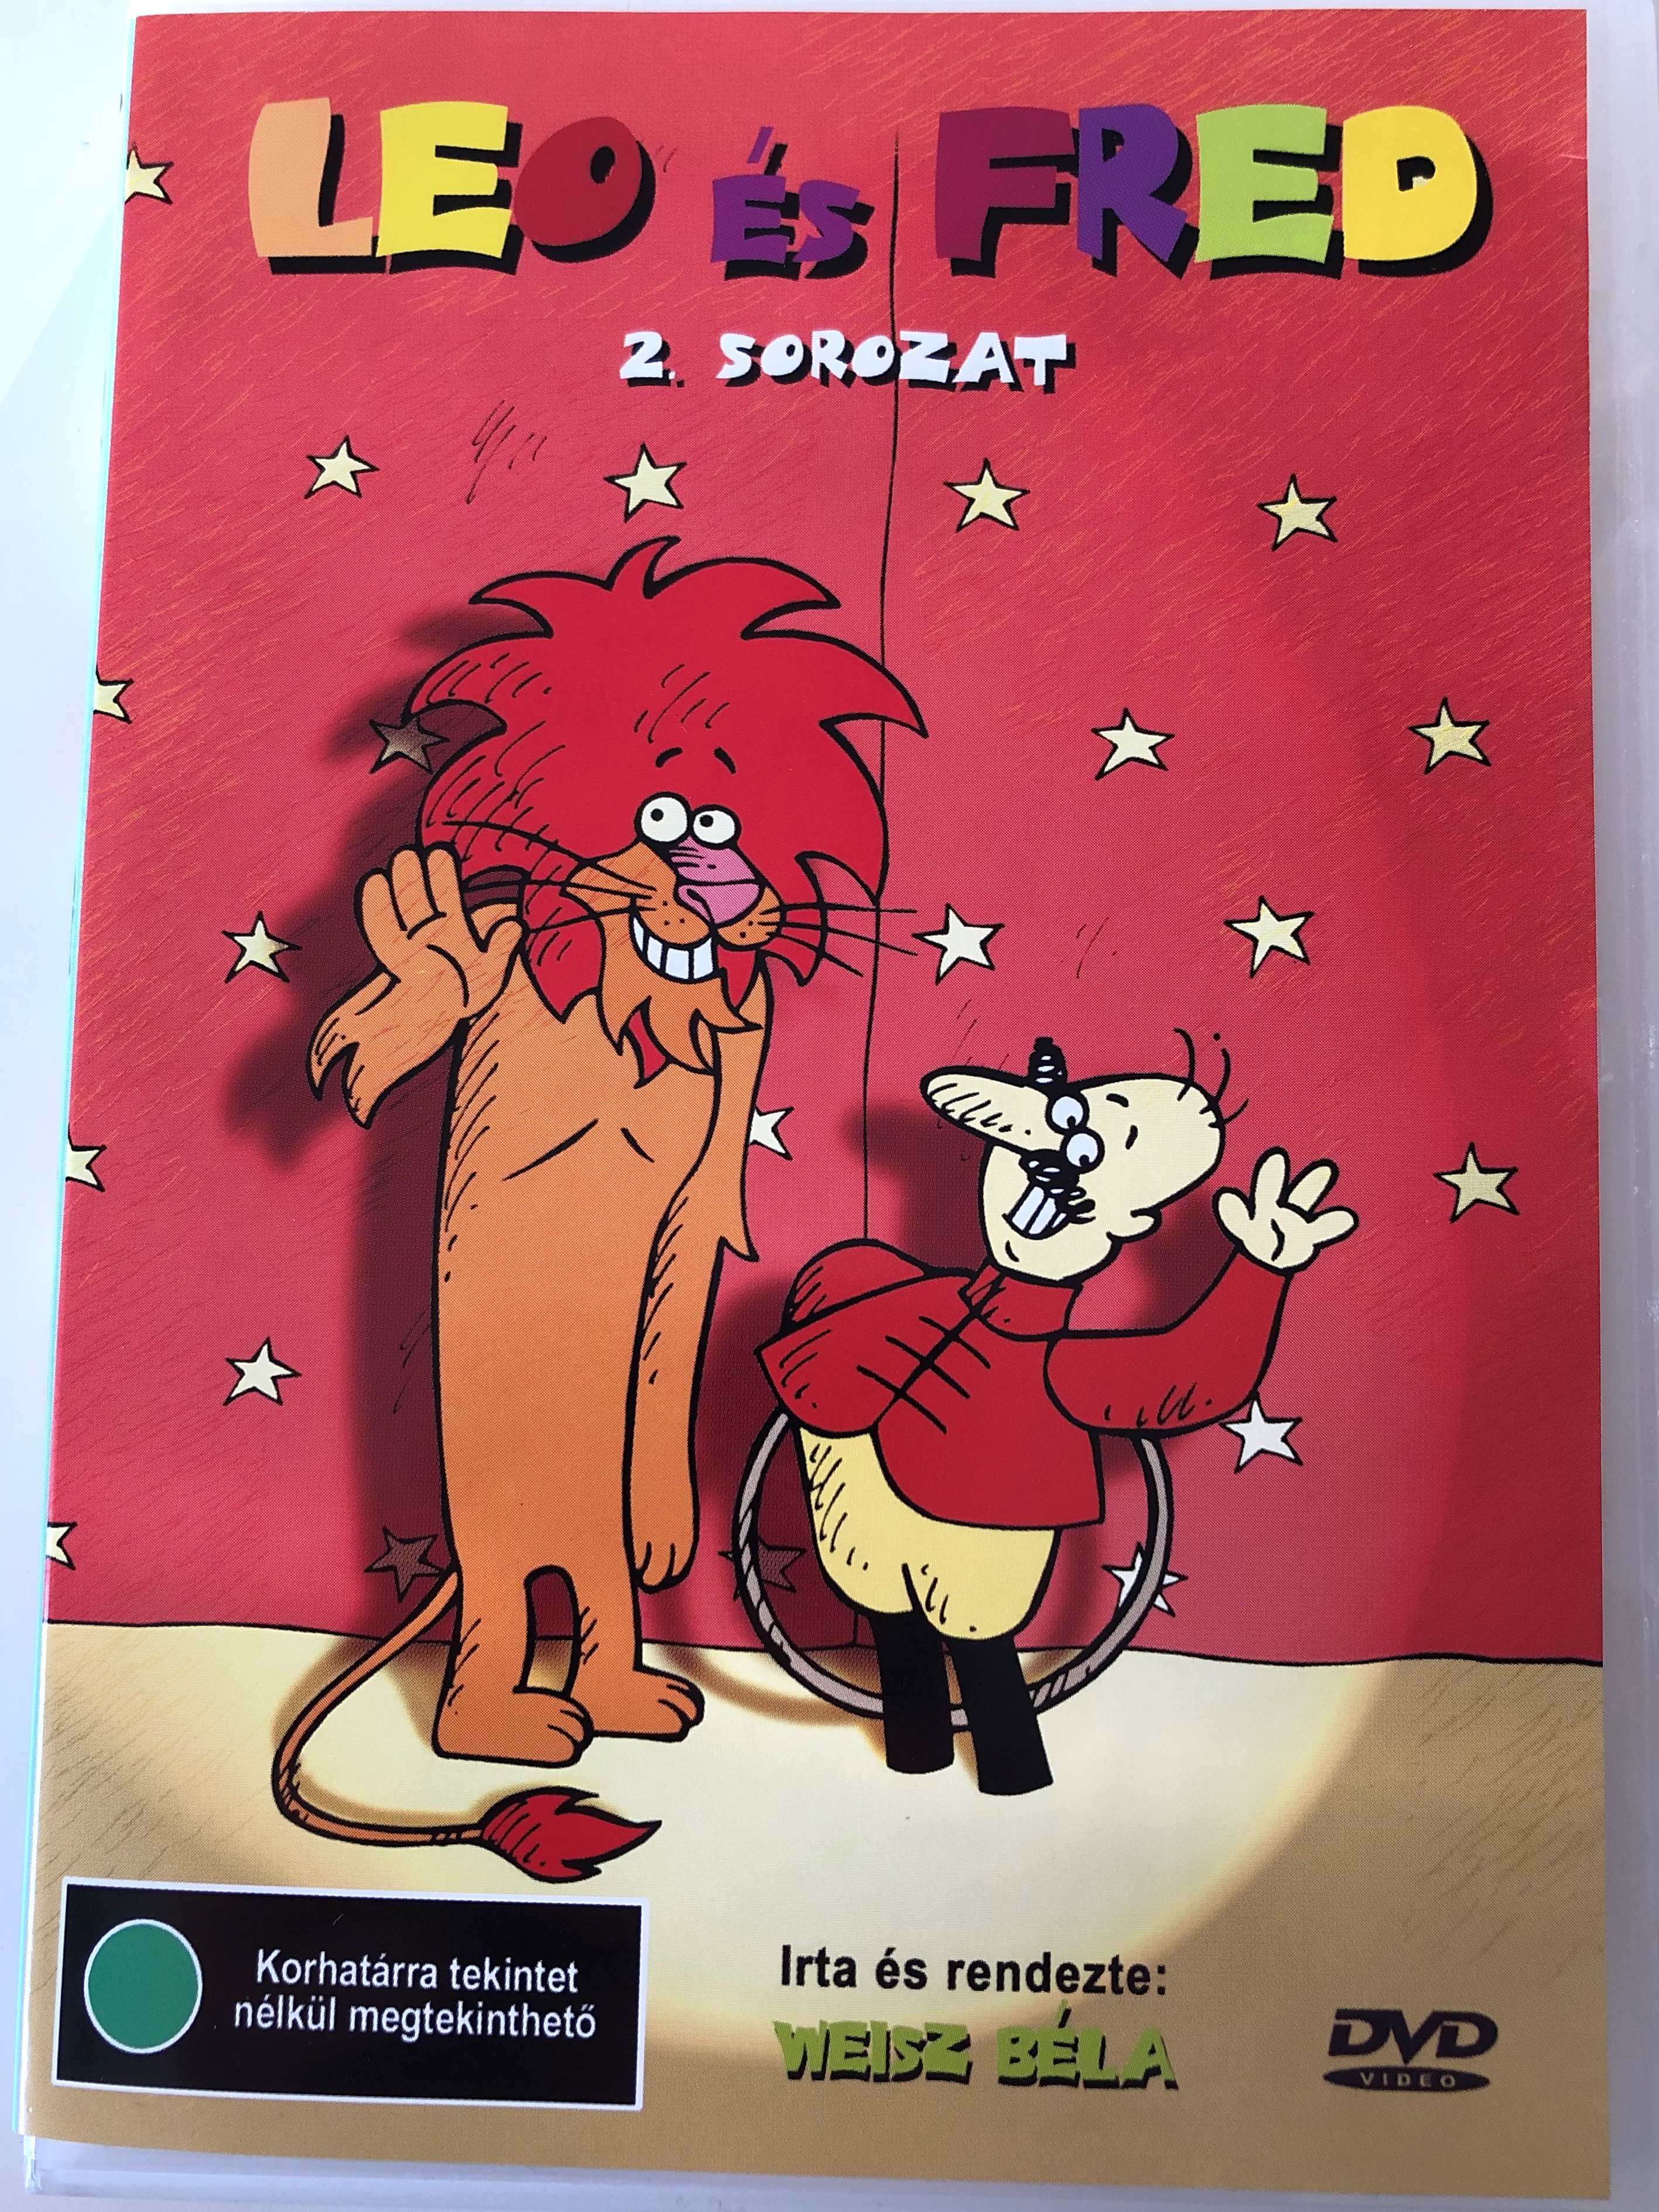 leo-s-fred-2.-sorozat-dvd-1993-hungarian-cartoon-series-1.jpg